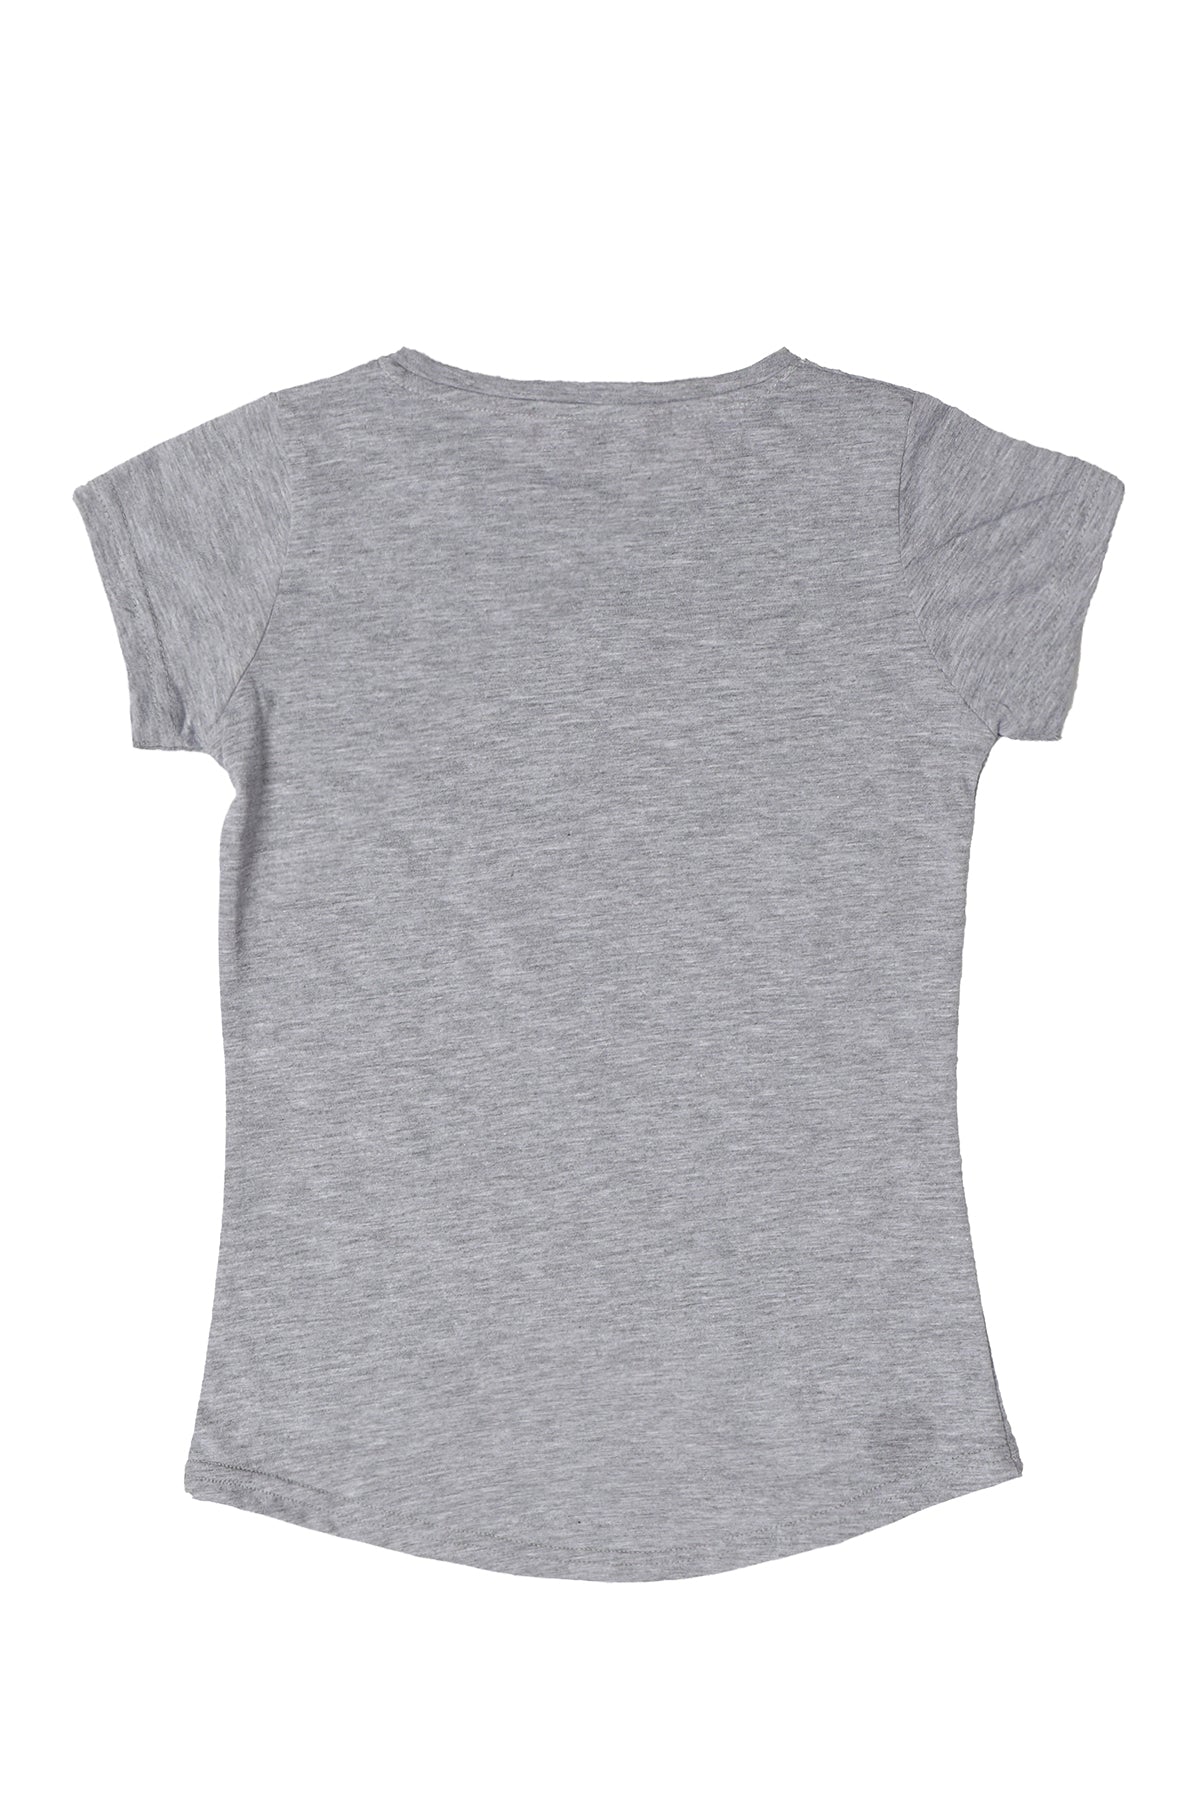 Tween Kids Girls Casual T - Shirt (7915051843808)